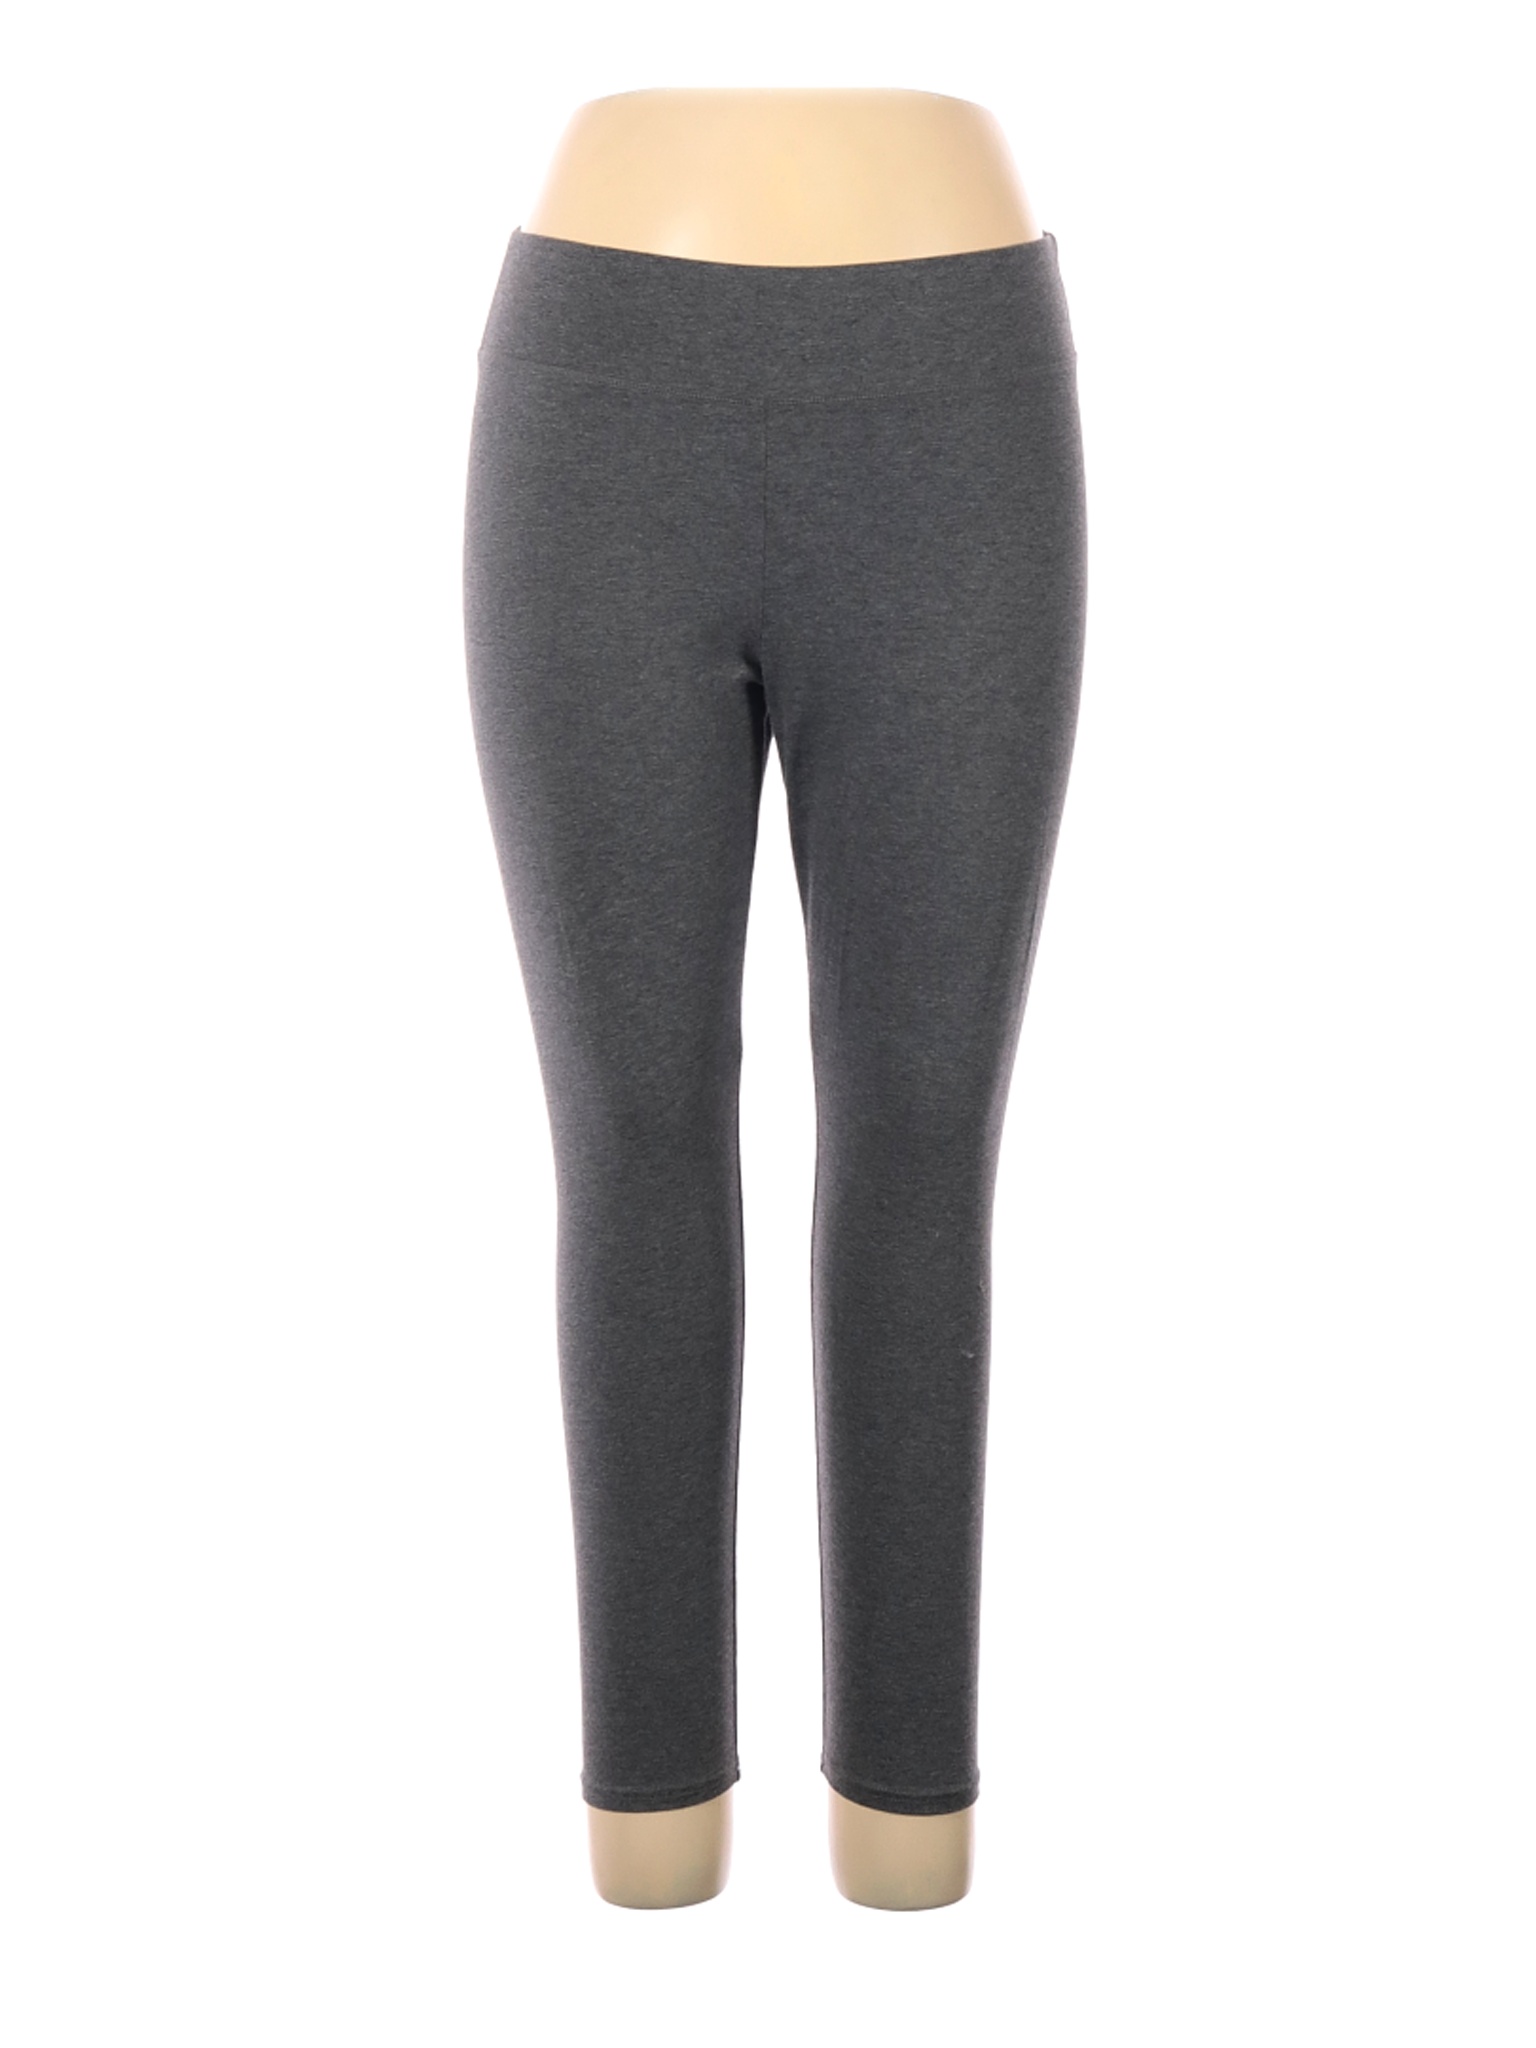 Aerie Women Gray Casual Pants XL | eBay